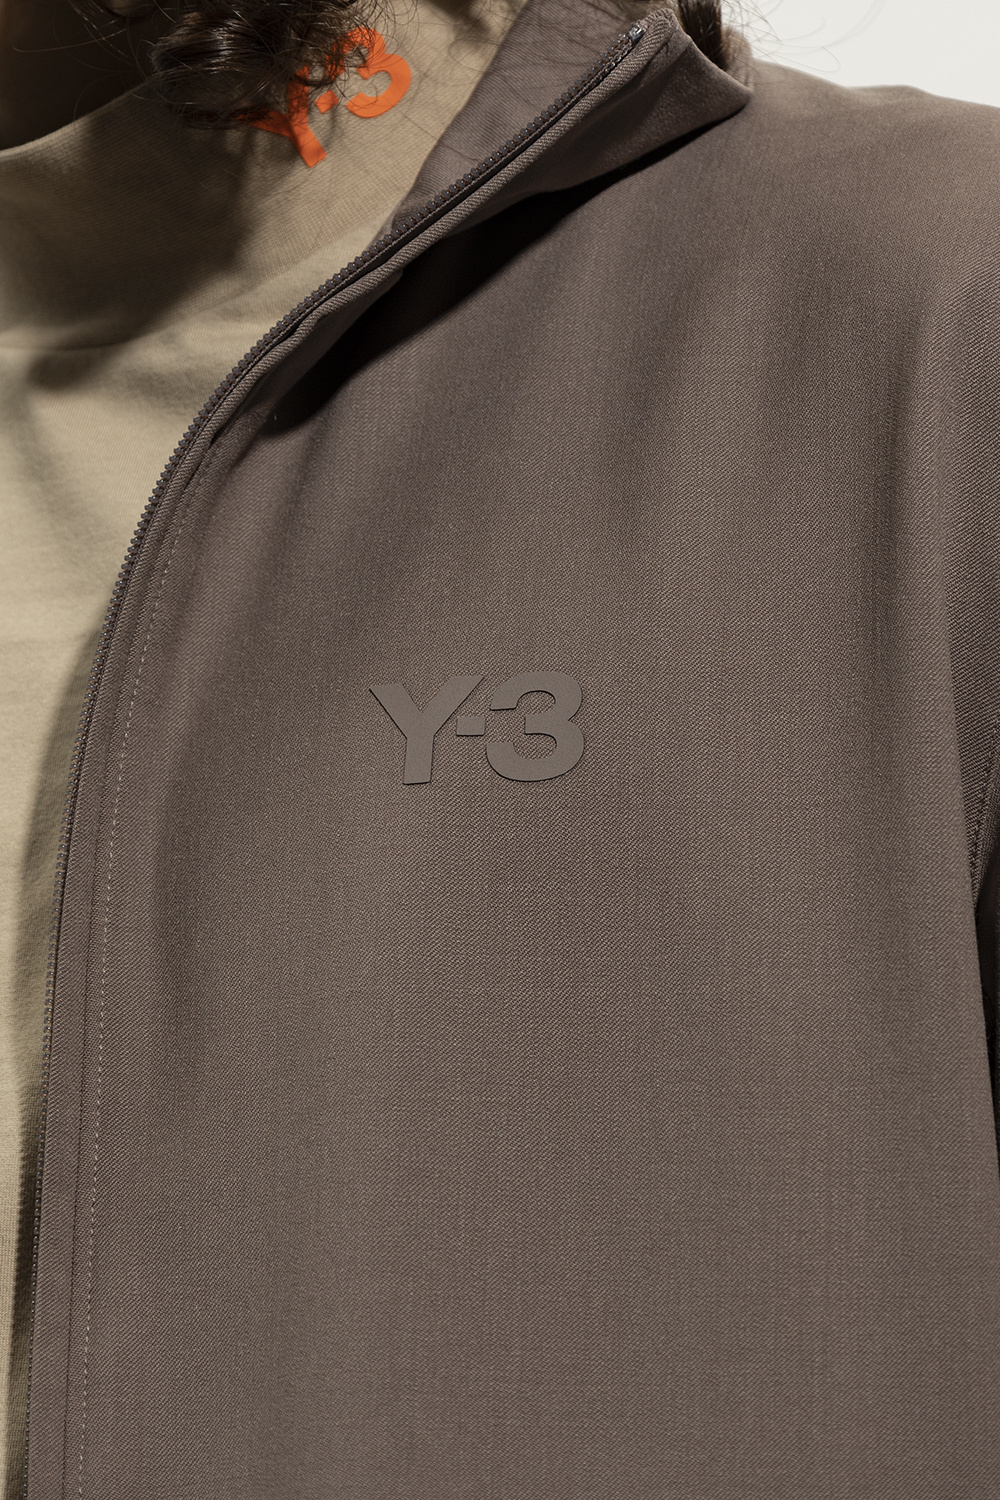 Y-3 Yohji Yamamoto Track jacket | Men's Clothing | Vitkac